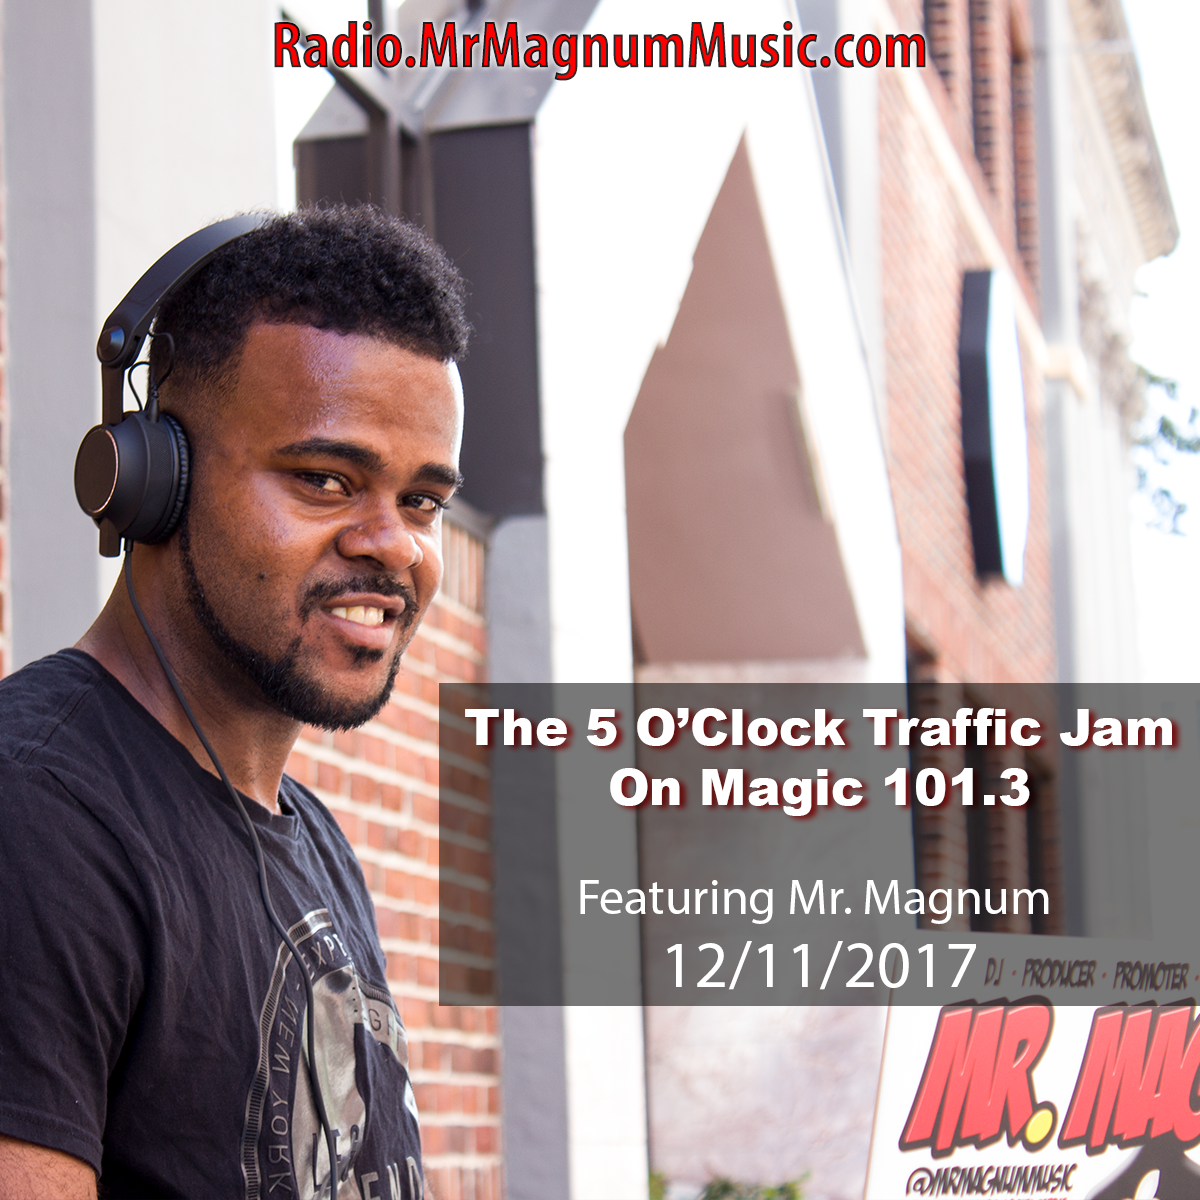 The 5 O'Clock Traffic Jam 20171211 featuring Gainesville's #1 DJ, Mr. Magnum on Magic 101.3